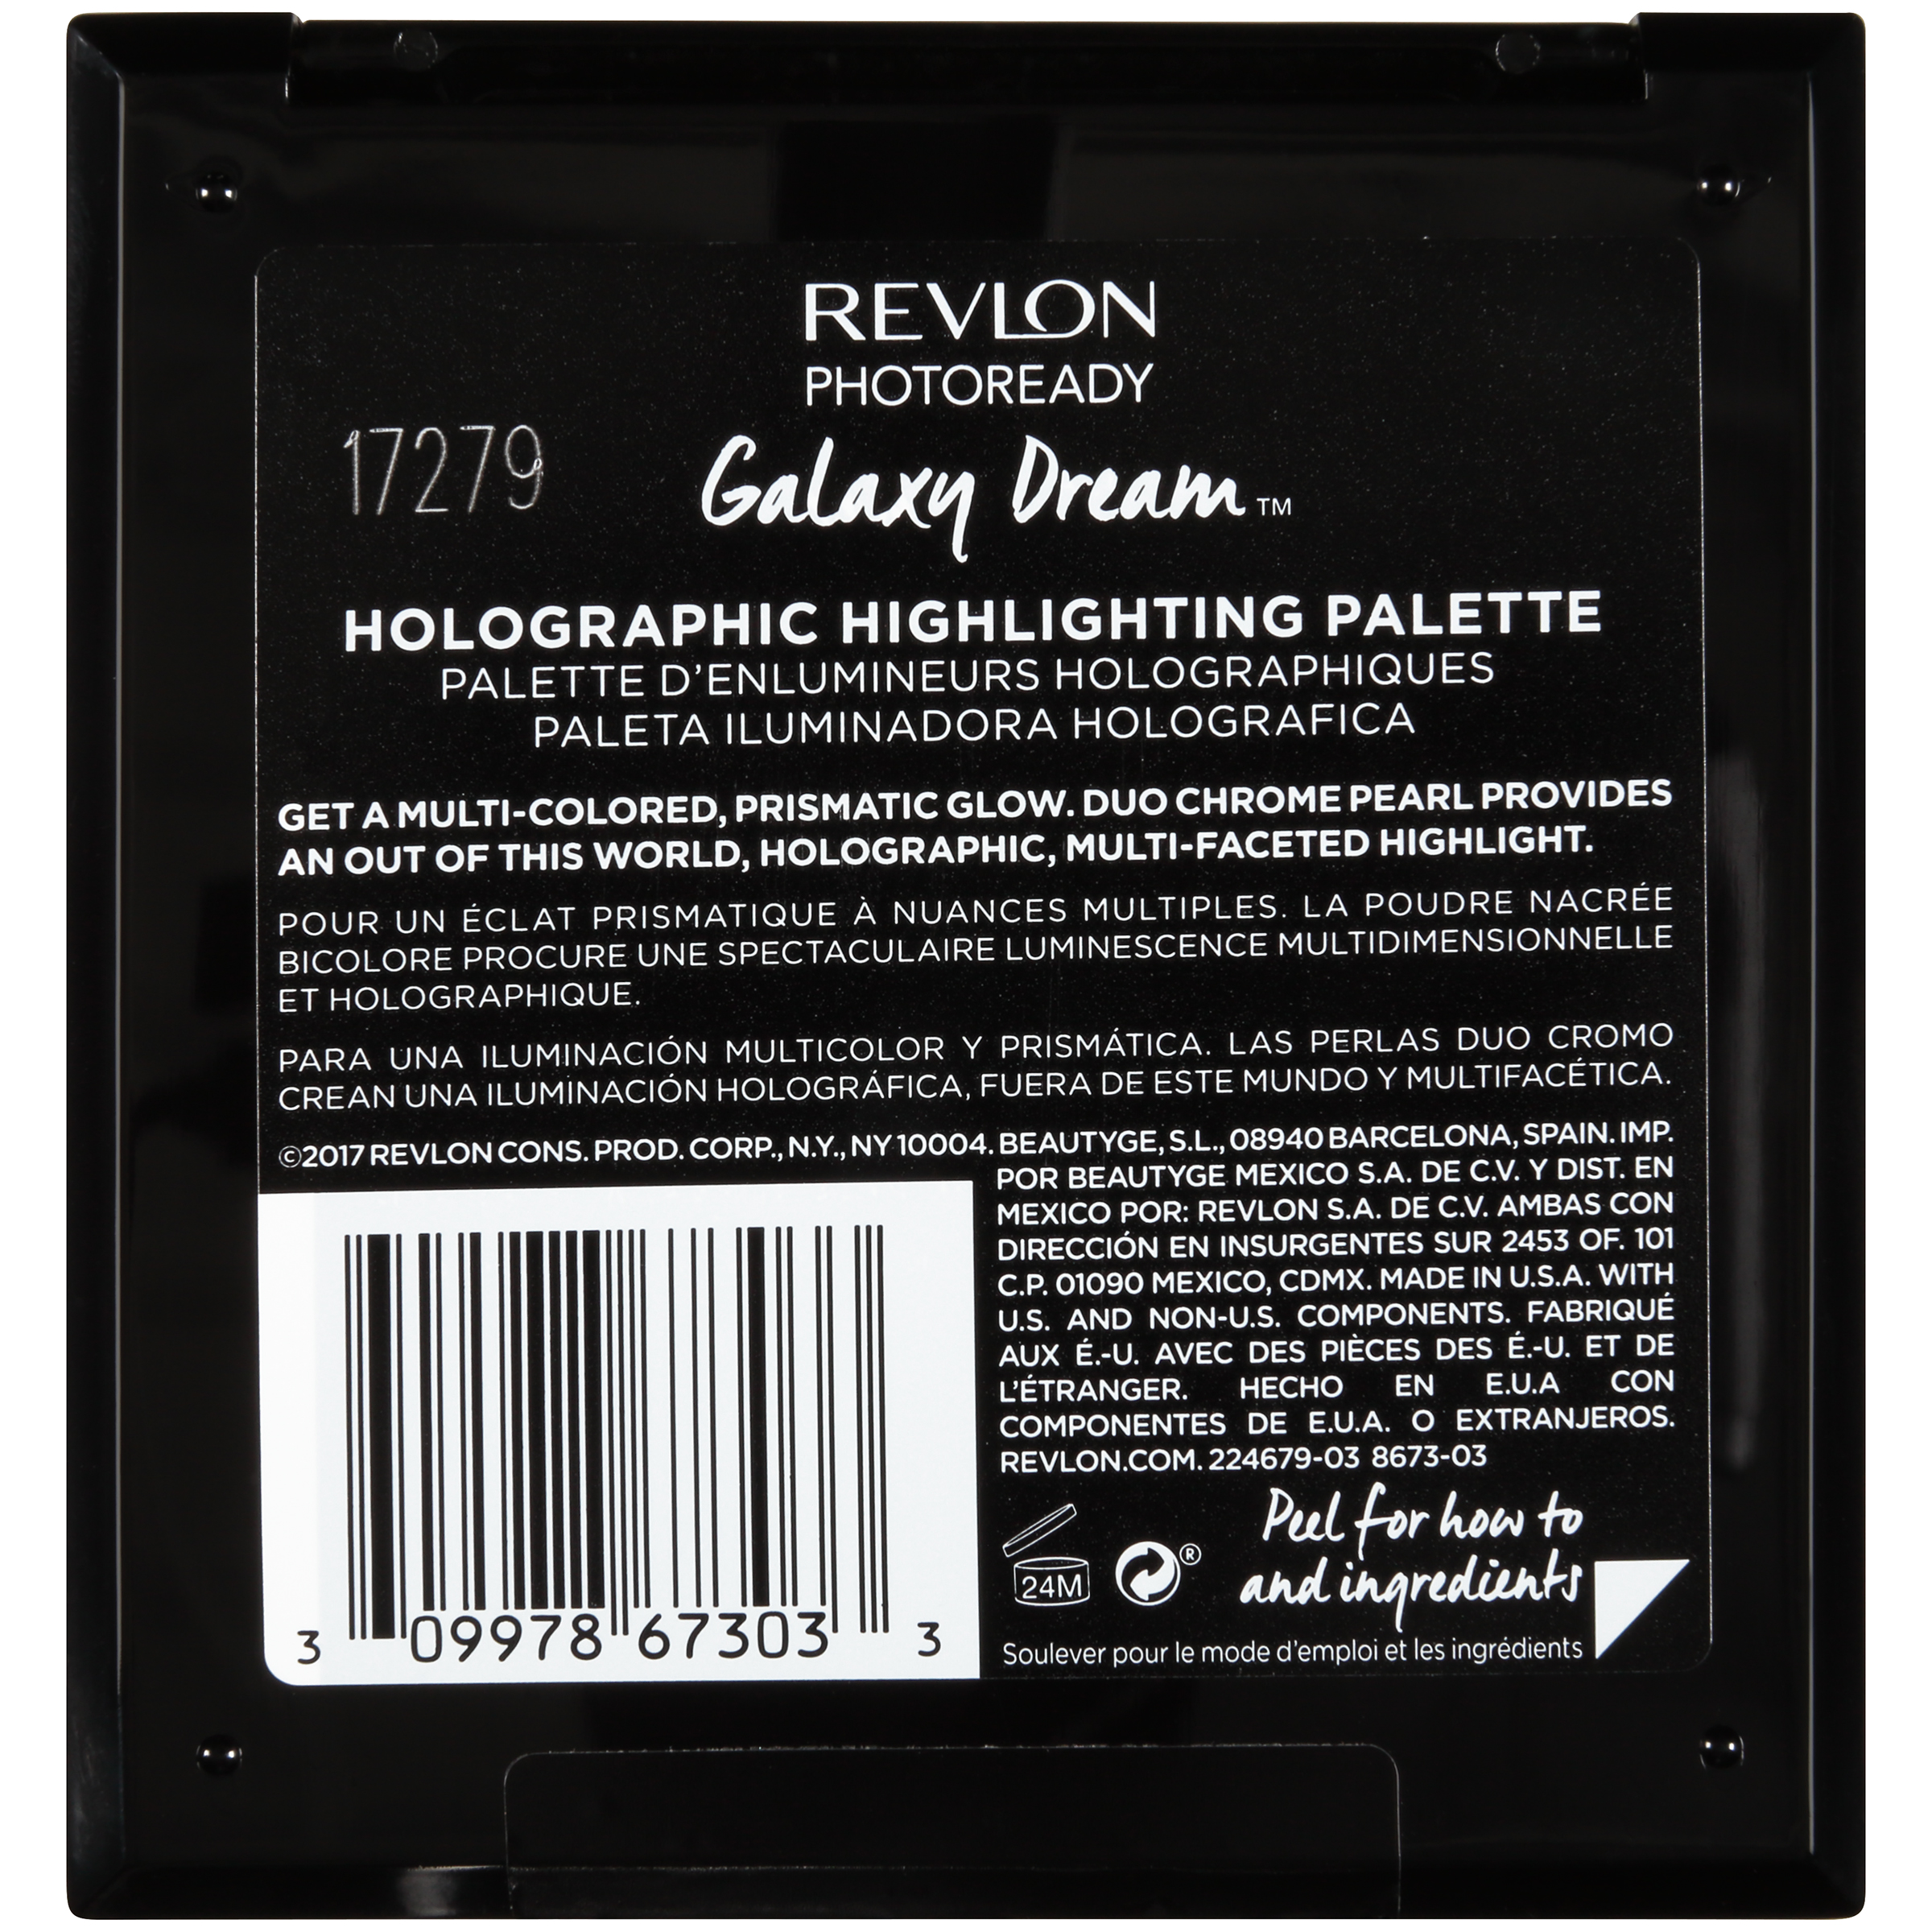 Revlon PhotoReady Highlighting Palette, Galaxy Dream - image 3 of 4